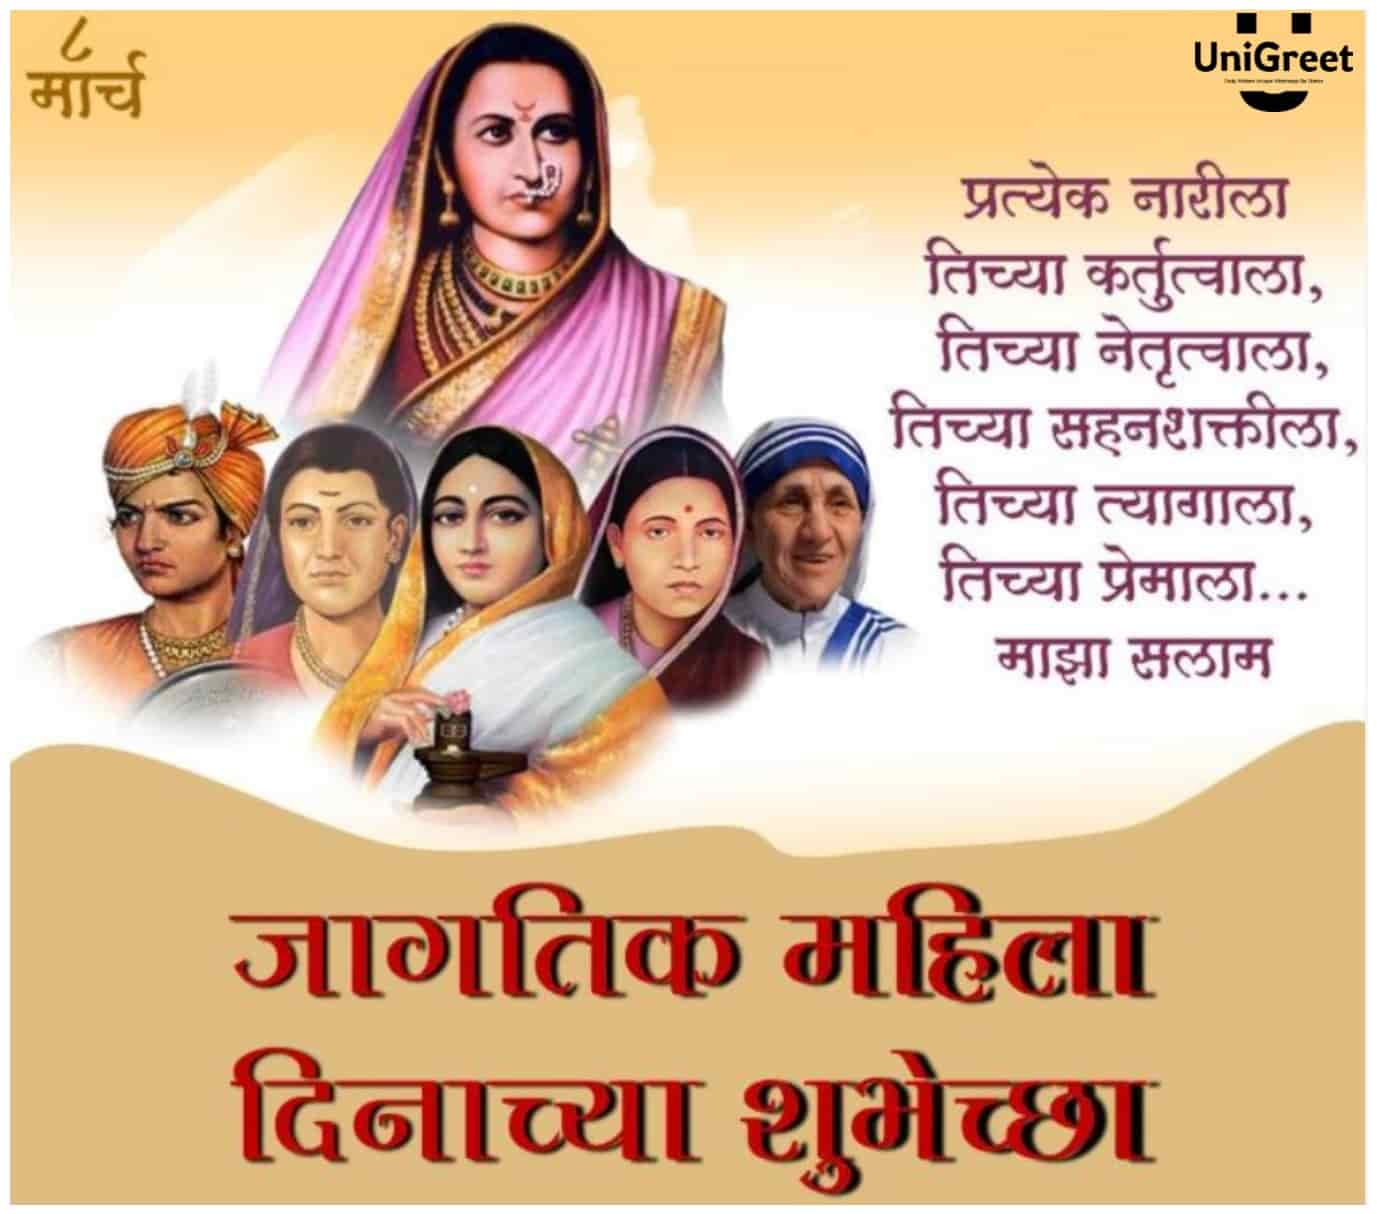 Happy Women's Day Images In Marathi